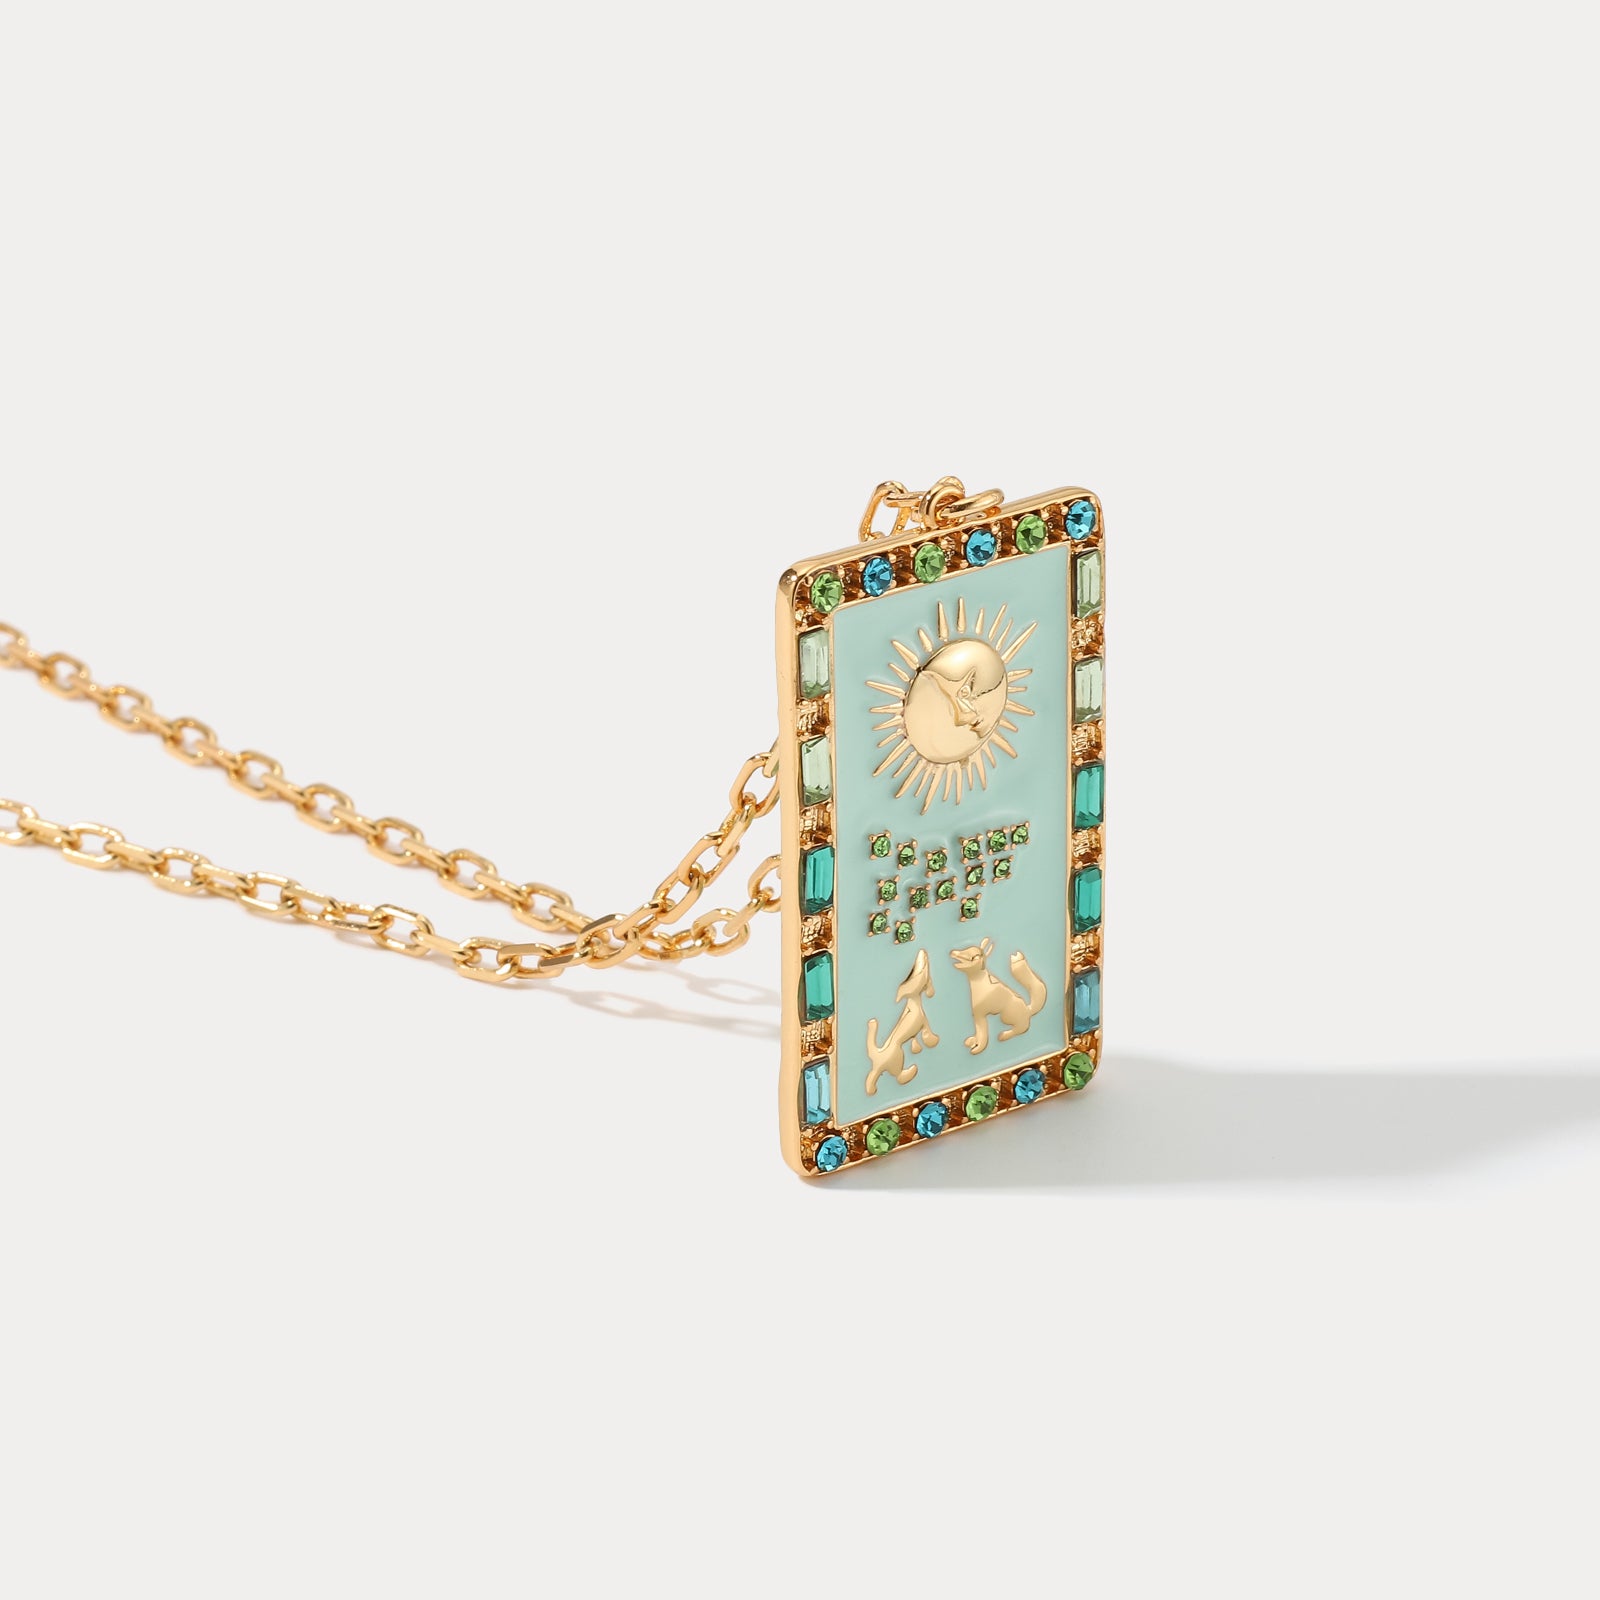 The Moon Tarot Necklace Spiritual Gift Ideas For Girls